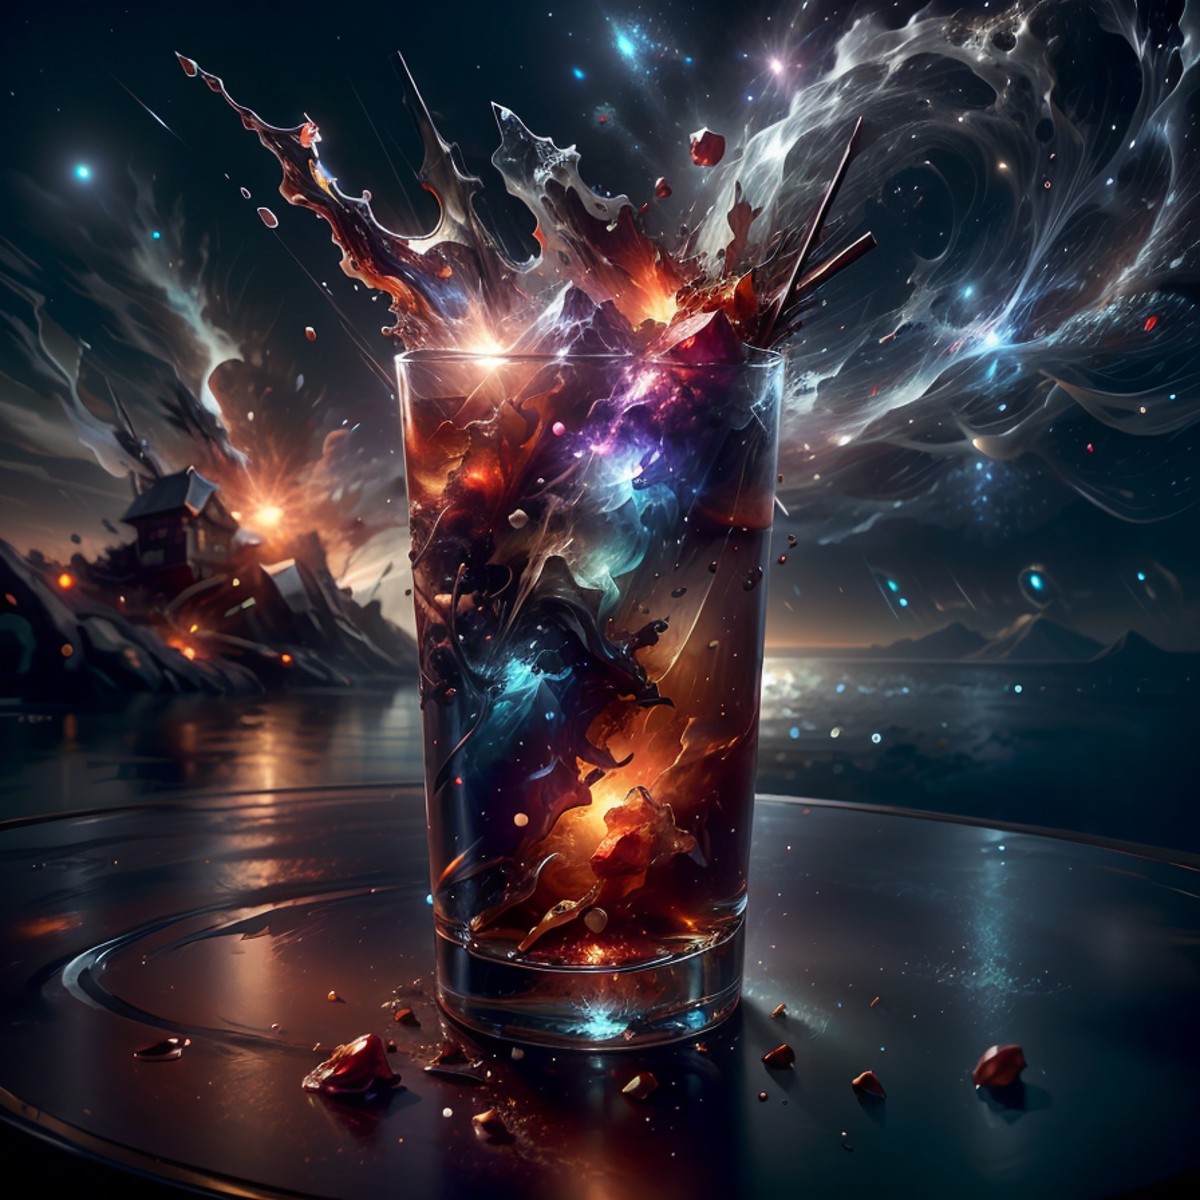 Explosion magic - Grimoire image by mageofthesands